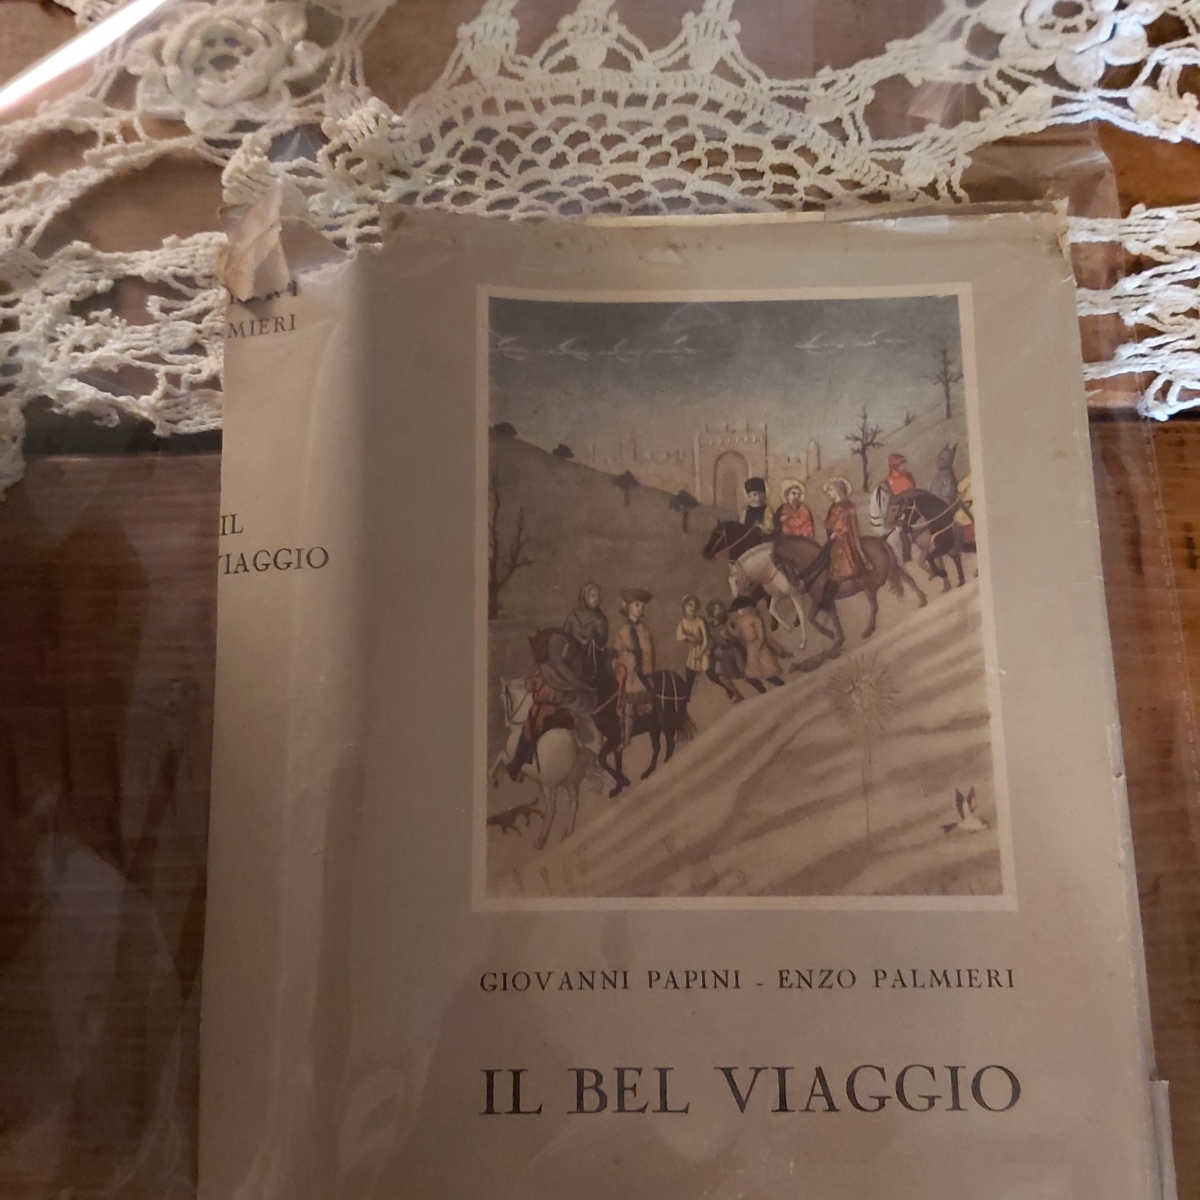 ANTOLOGIA – IL BEL VIAGGIO, Giovanni Papini – Enzo Palmieri, Palumbo, Febbraio 1954